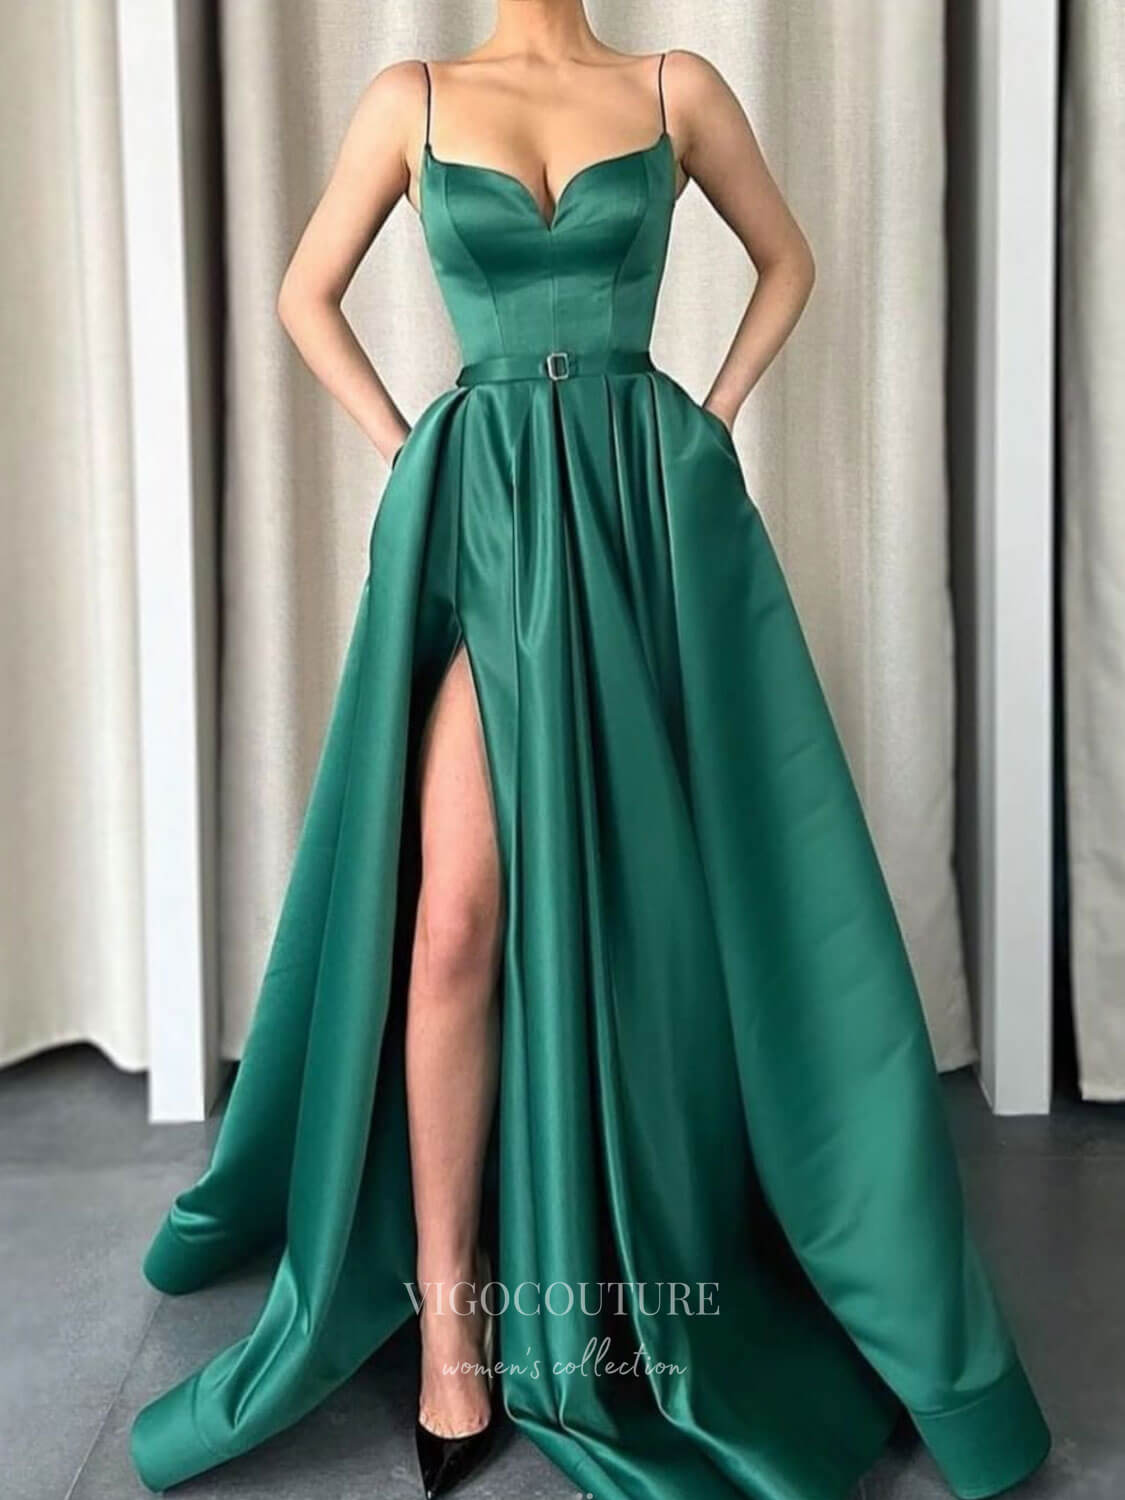 Spaghetti Strap Mocha Prom Dresses With Slit Satin A-Line Evening Dress 21810-Prom Dresses-vigocouture-Green-US2-vigocouture